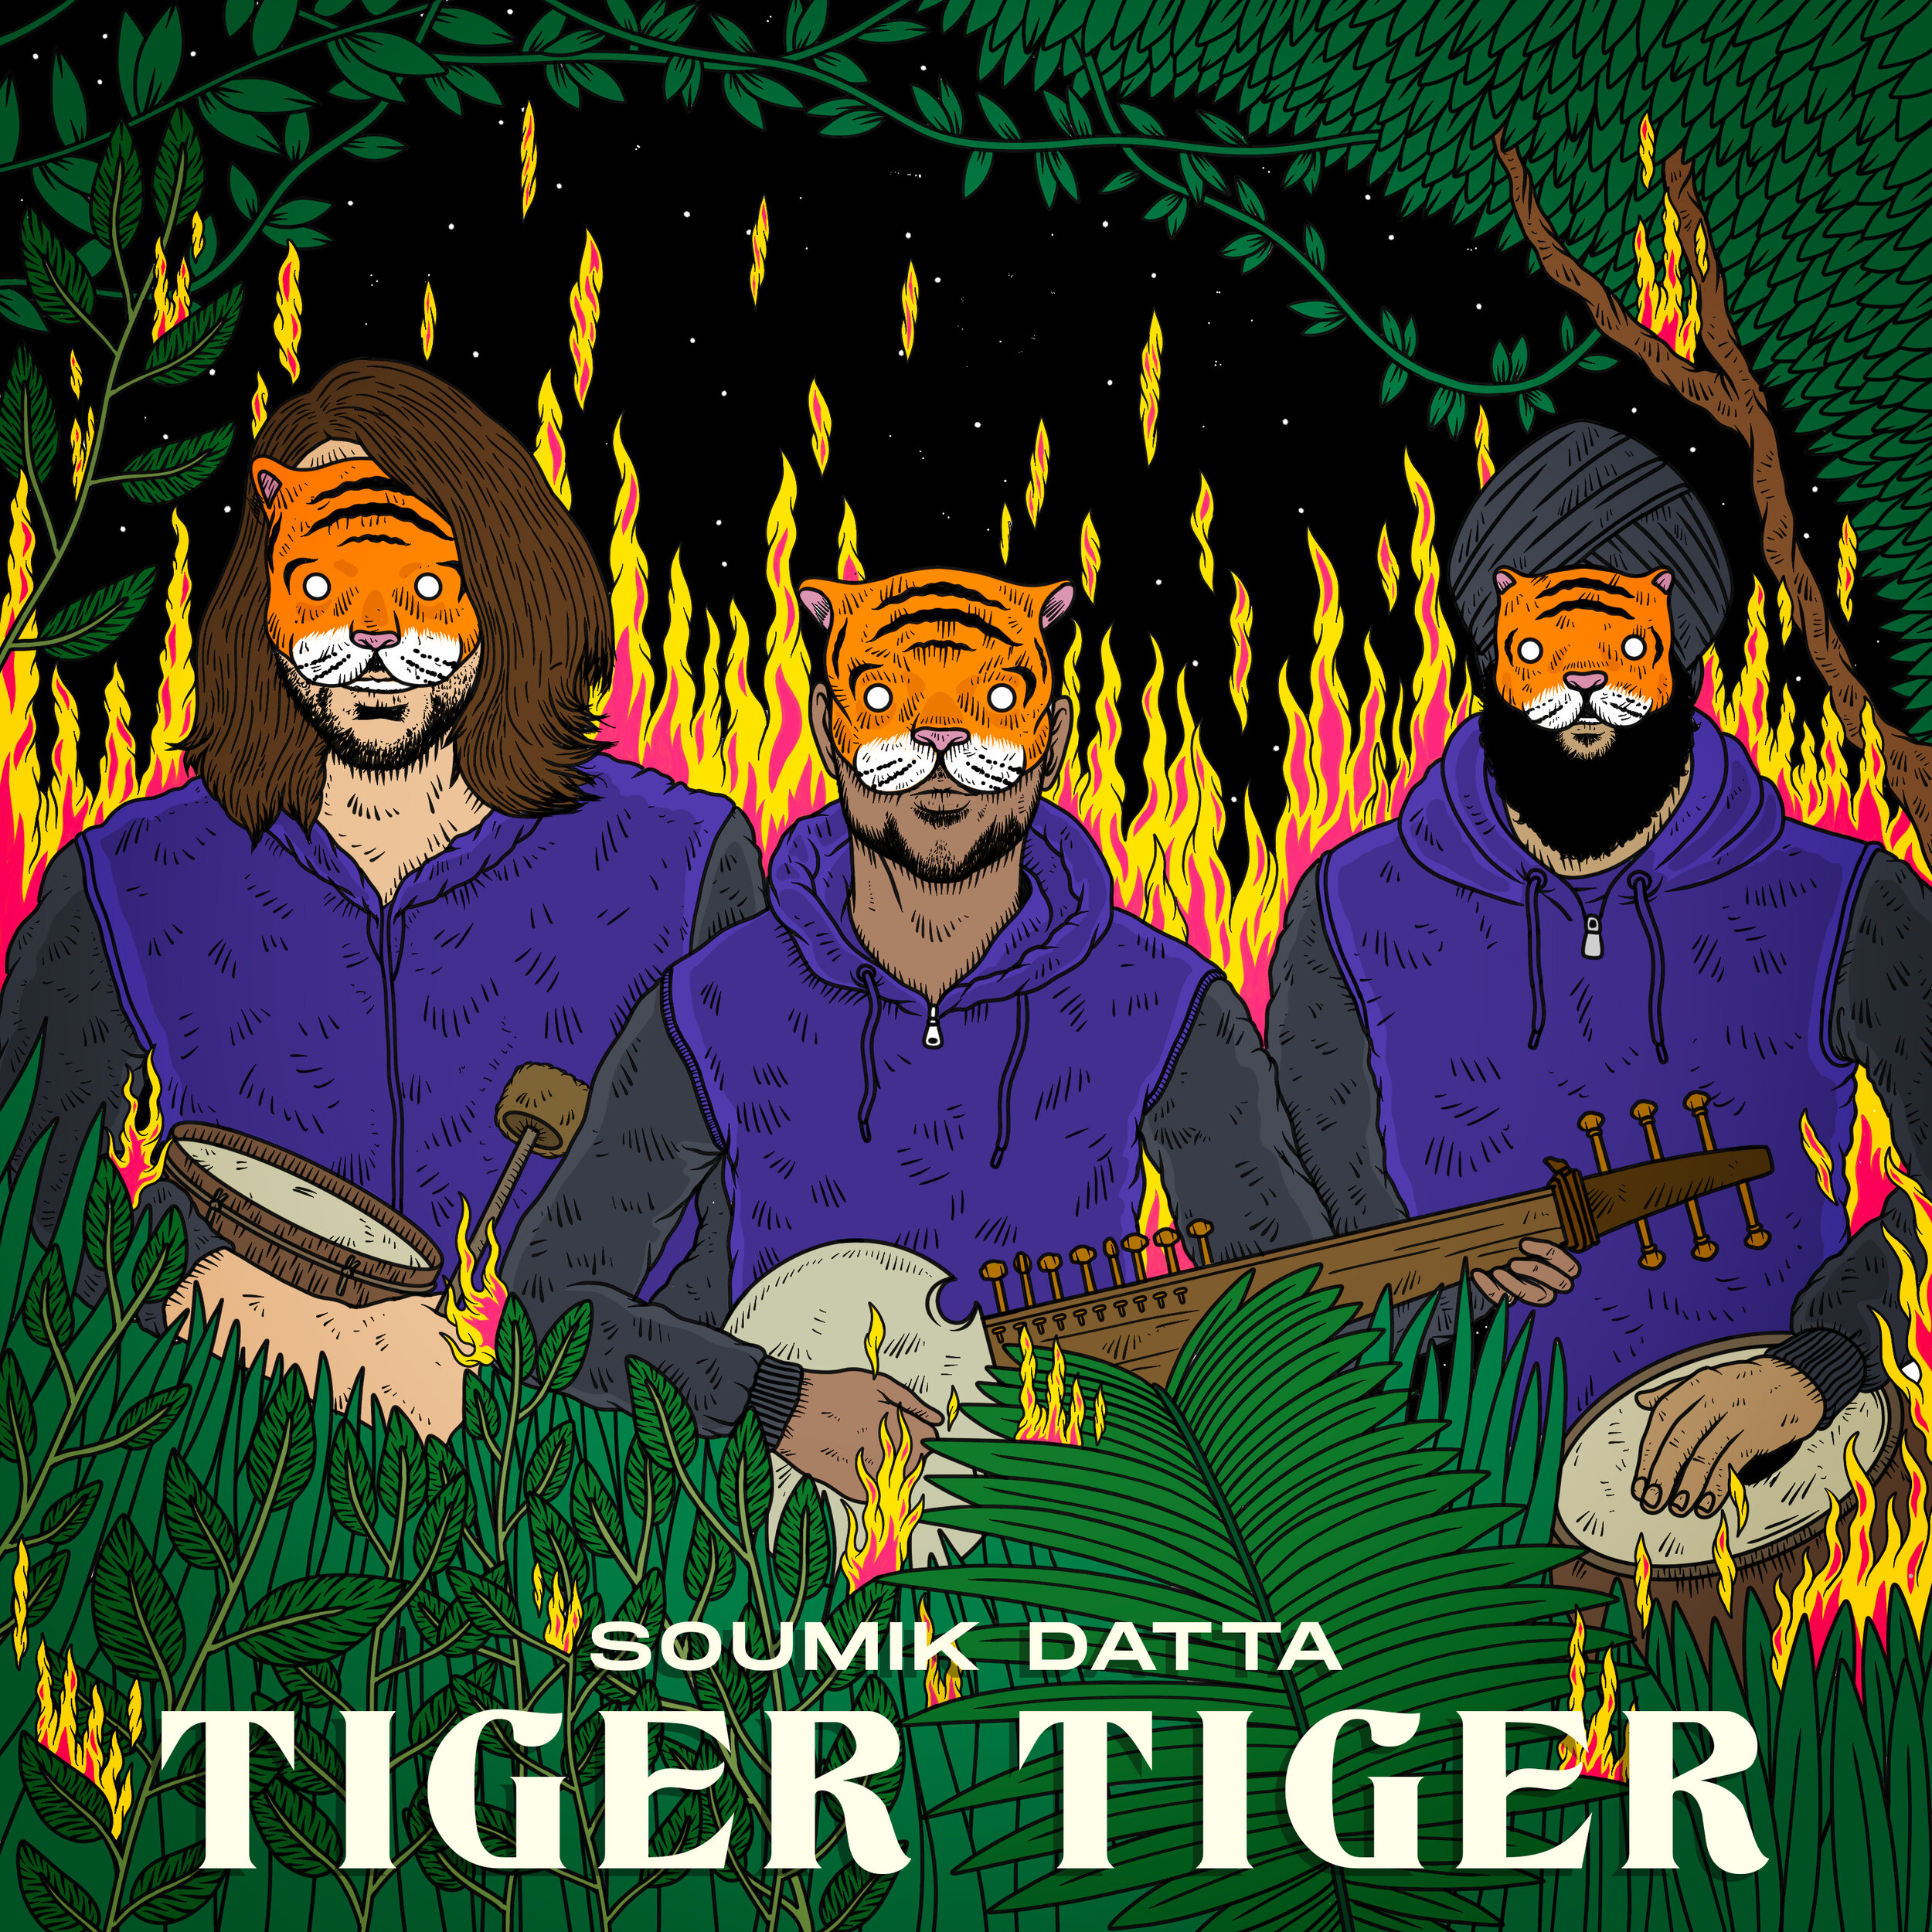 Tiger_Tiger Artwork by Sachin Bhatt.jpg